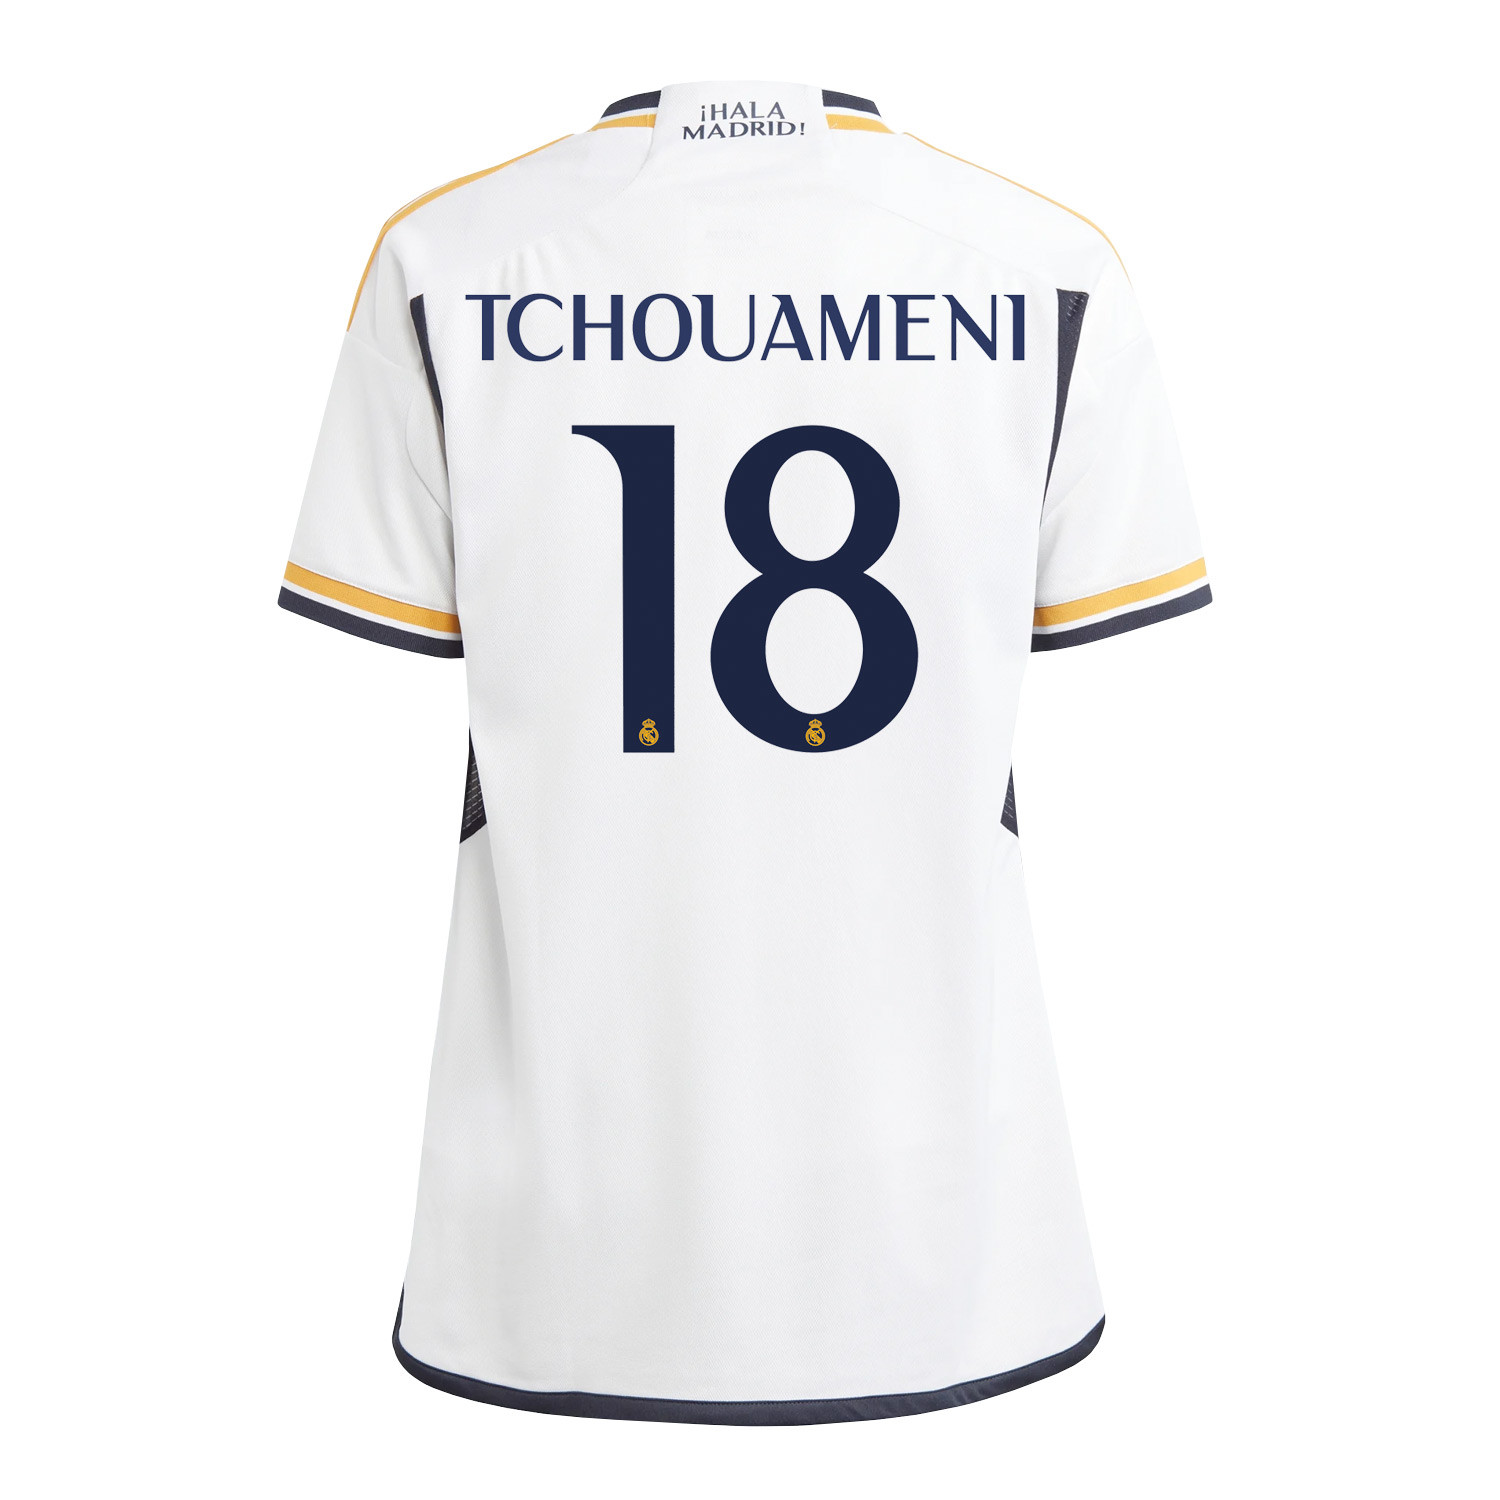 Camiseta adidas Real Madrid niño Tchouaméni 23-24